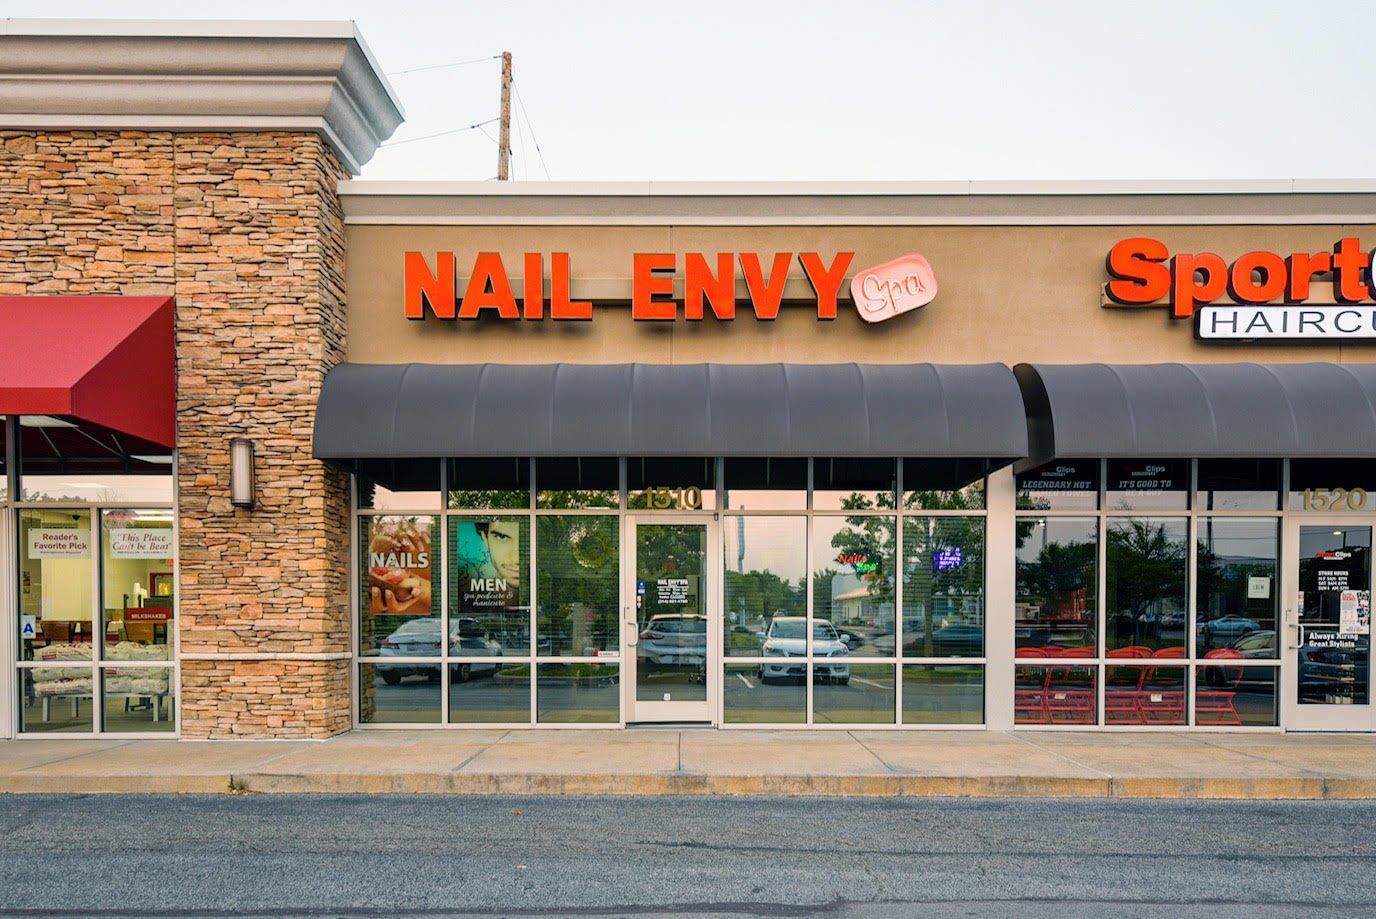 Nail Envy Spa  Front Entrance, St. Louis MO 63127